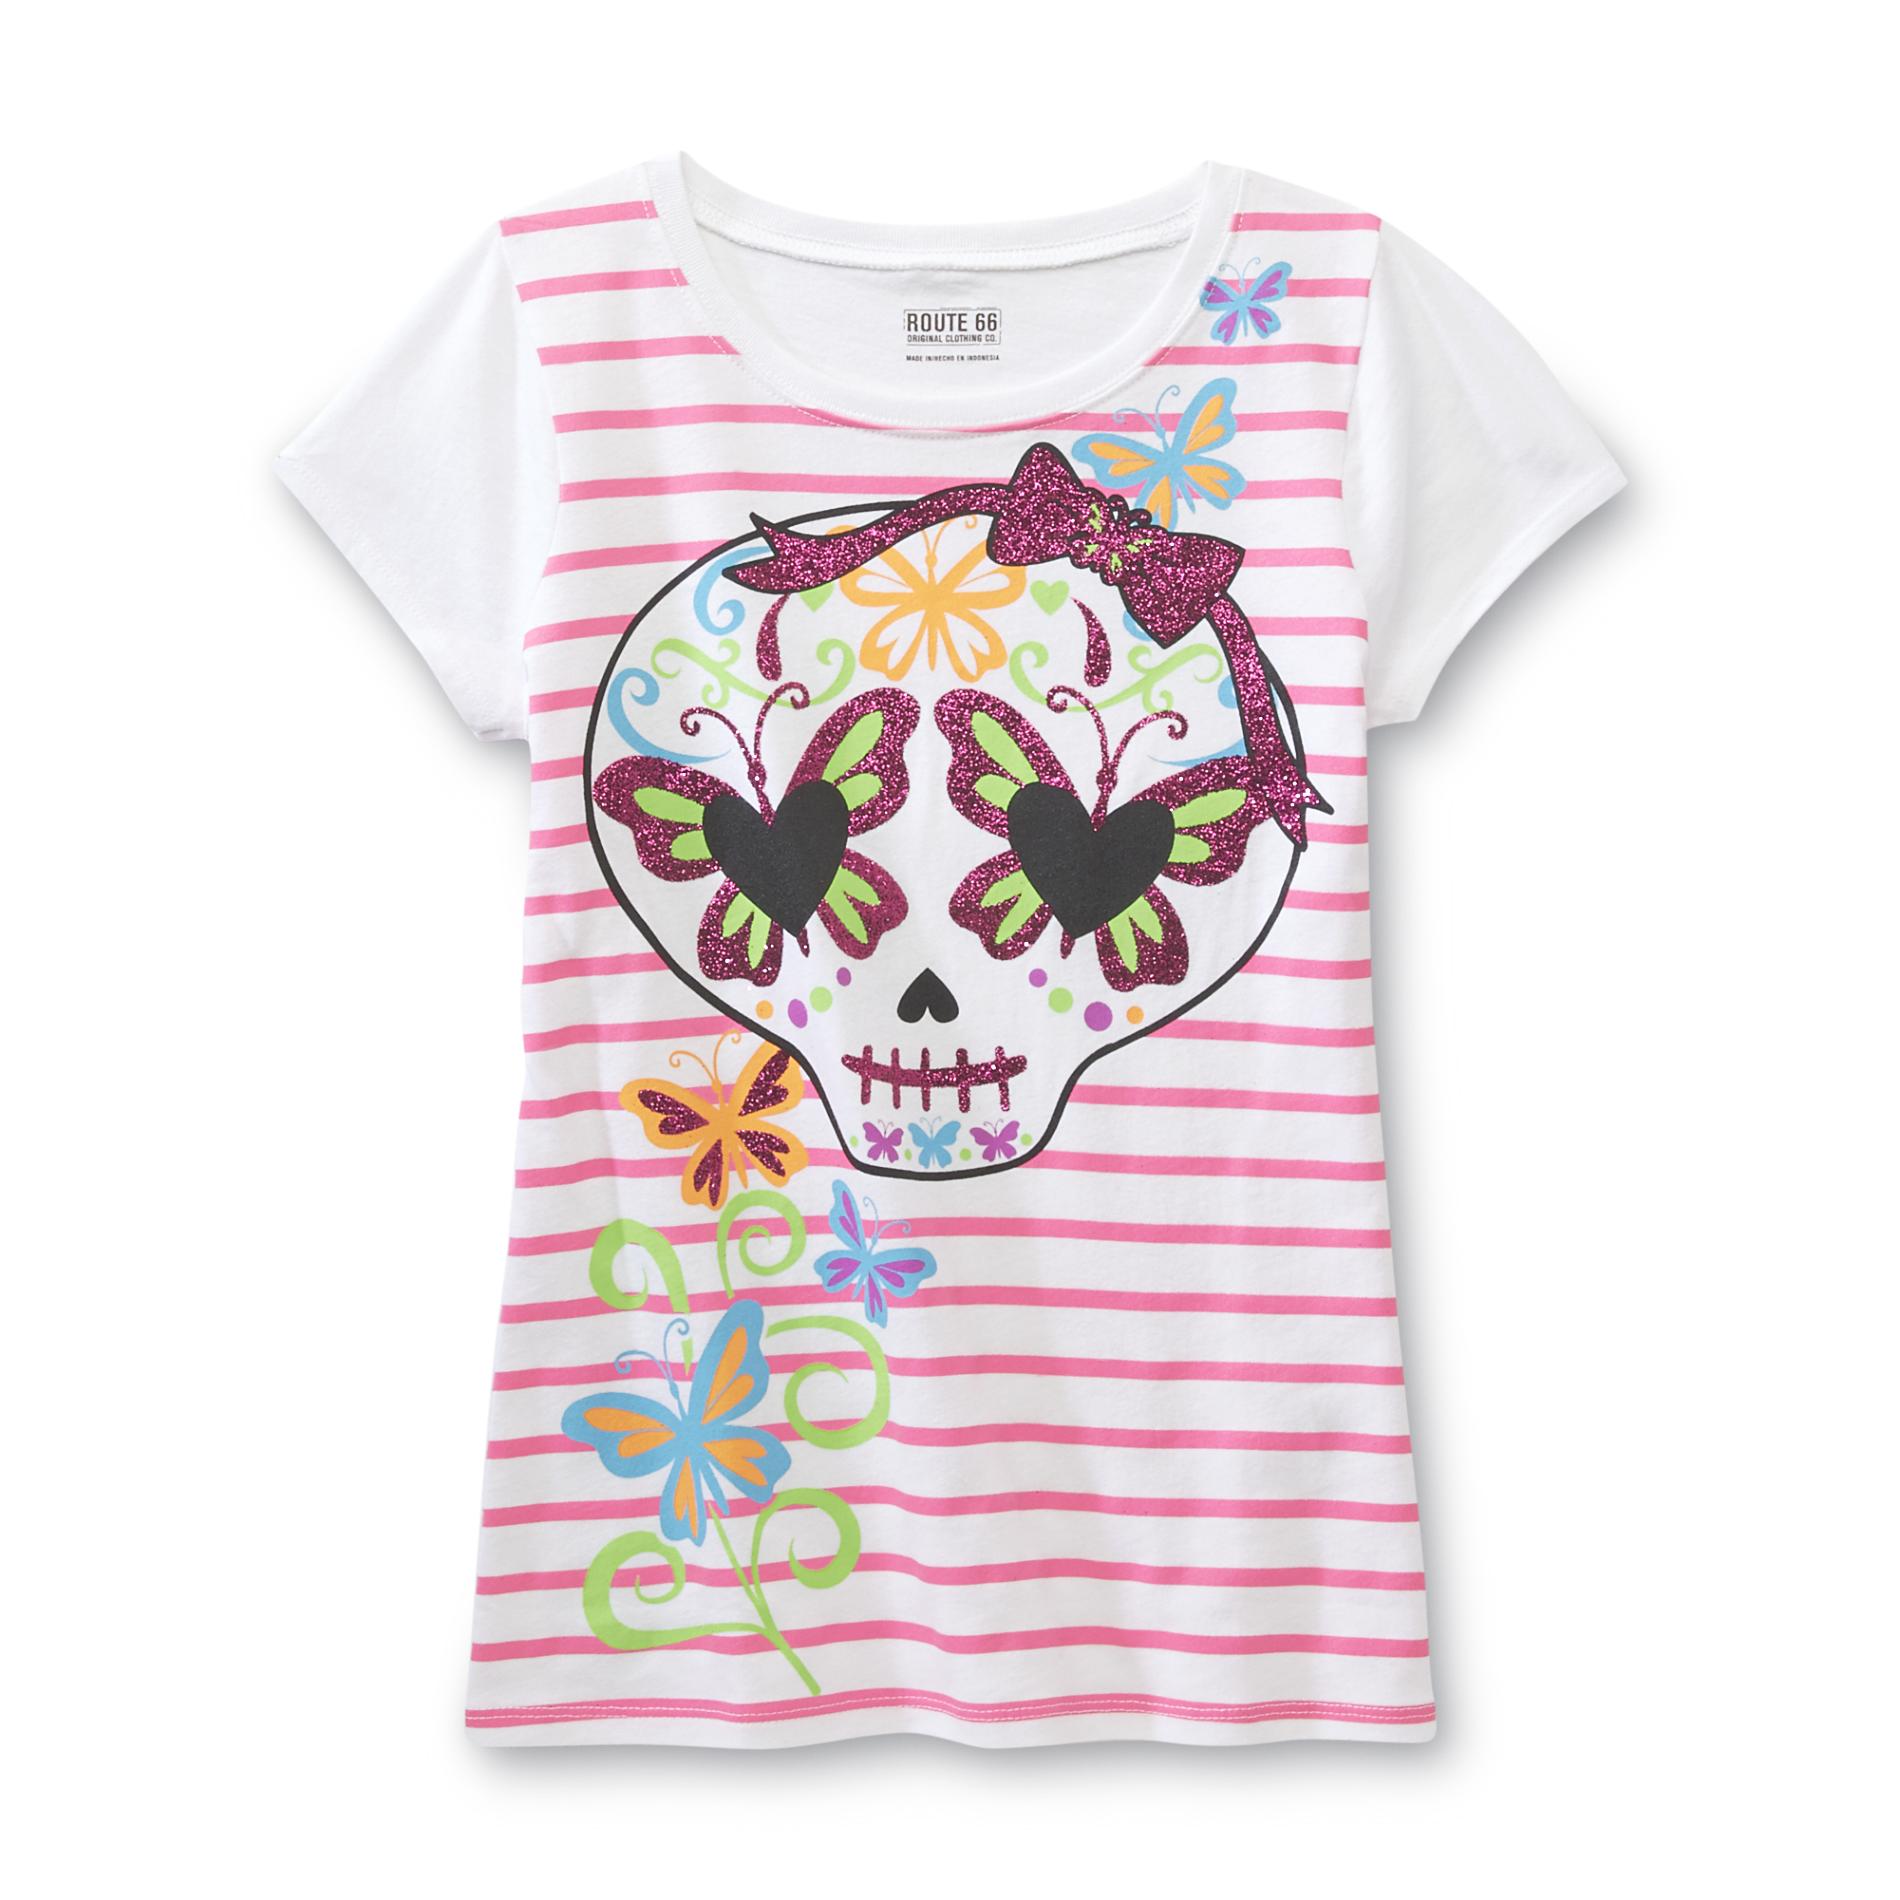 Route 66 Girl's Graphic T-Shirt - Sugar Skull/Butterflies